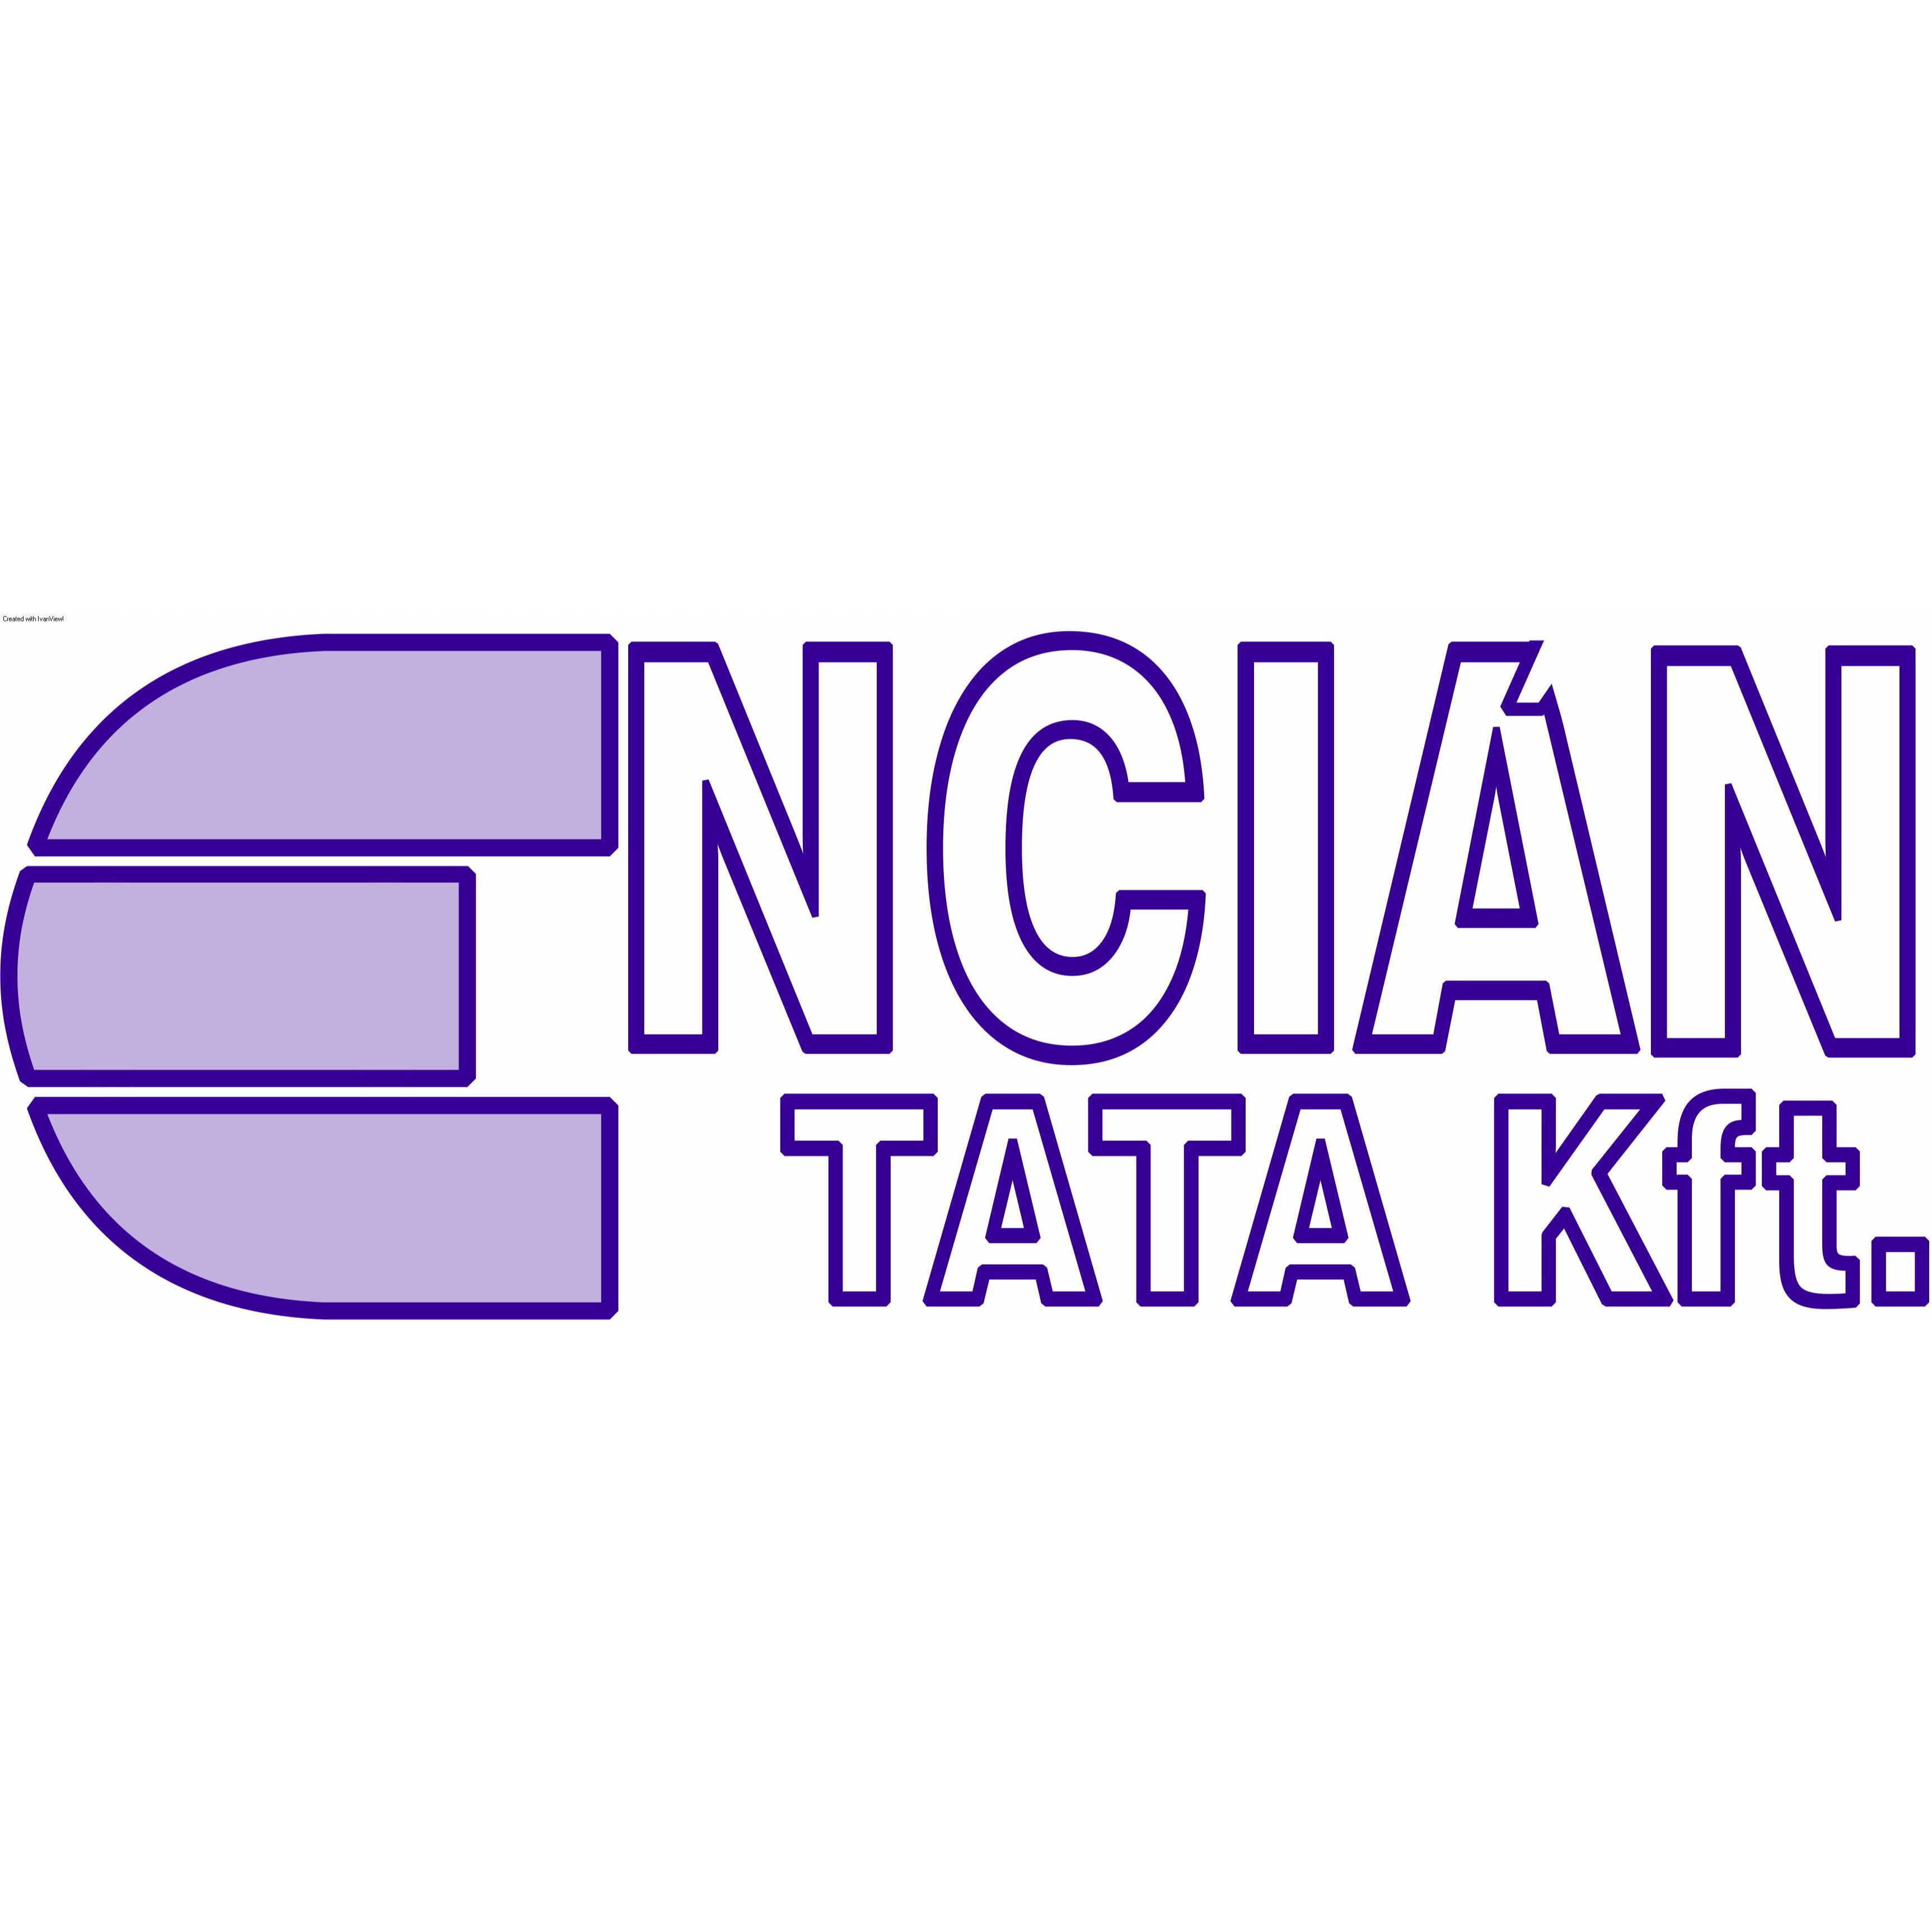 Encián-Tata Kft. Logo